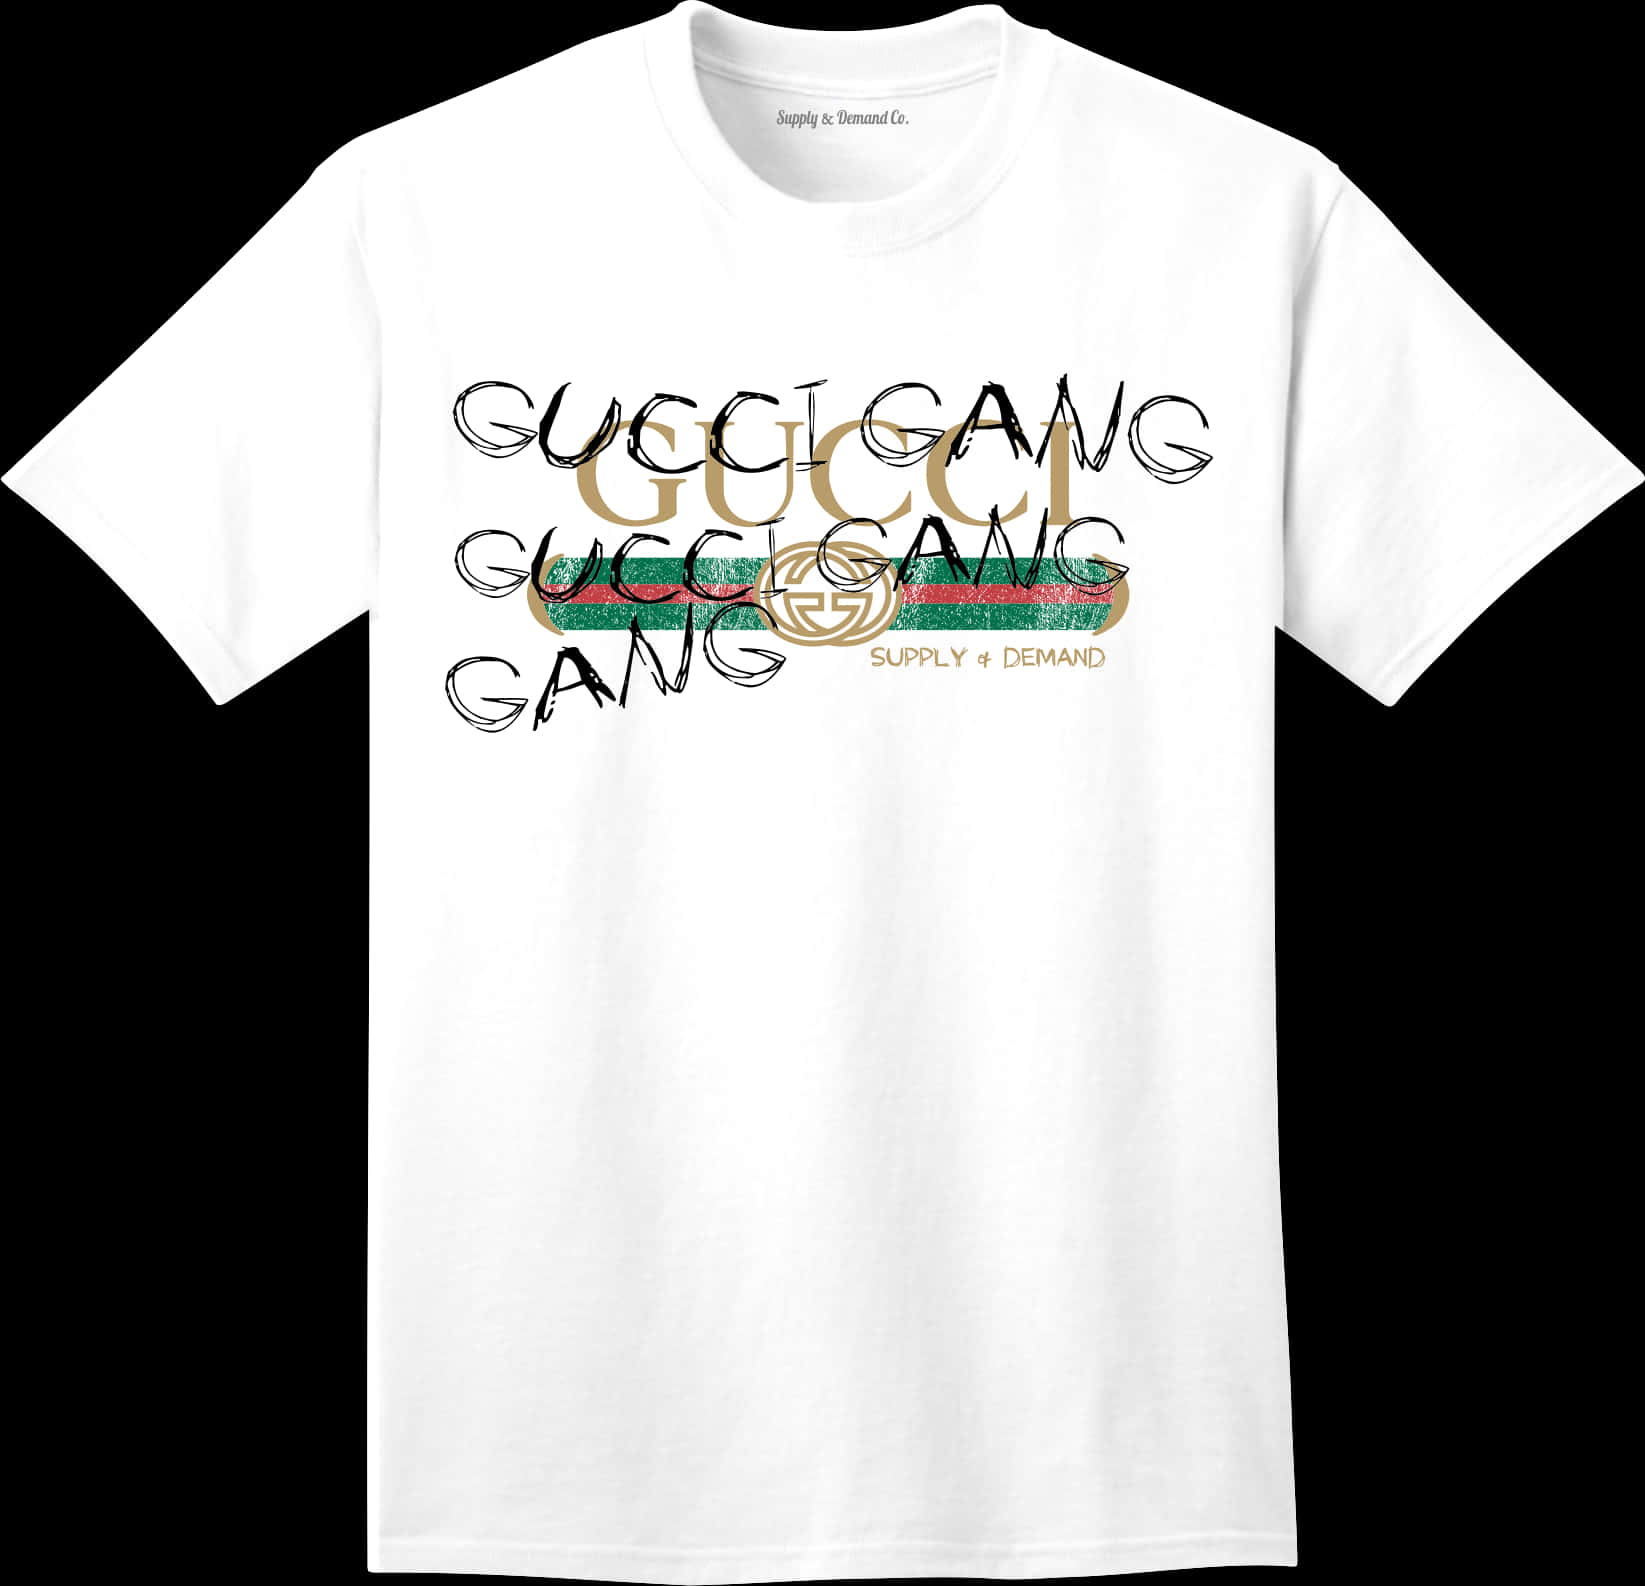 Gucci Gang Shirt